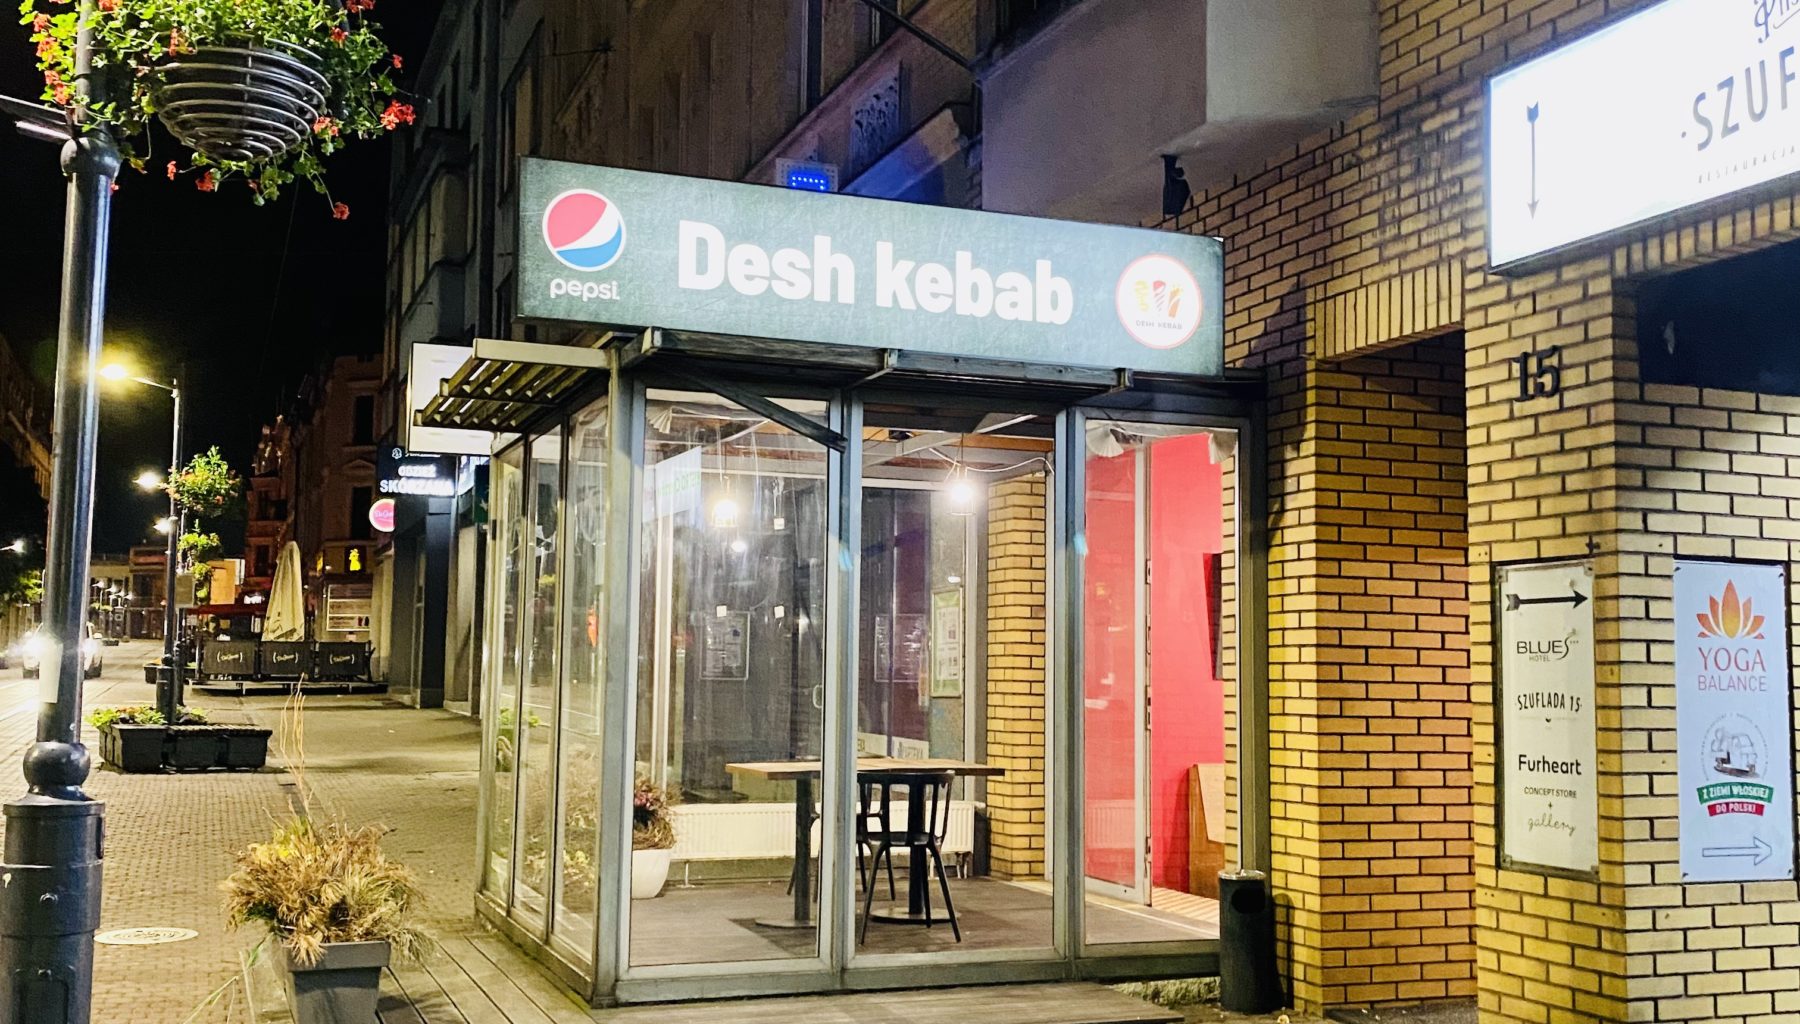 Desh kebab